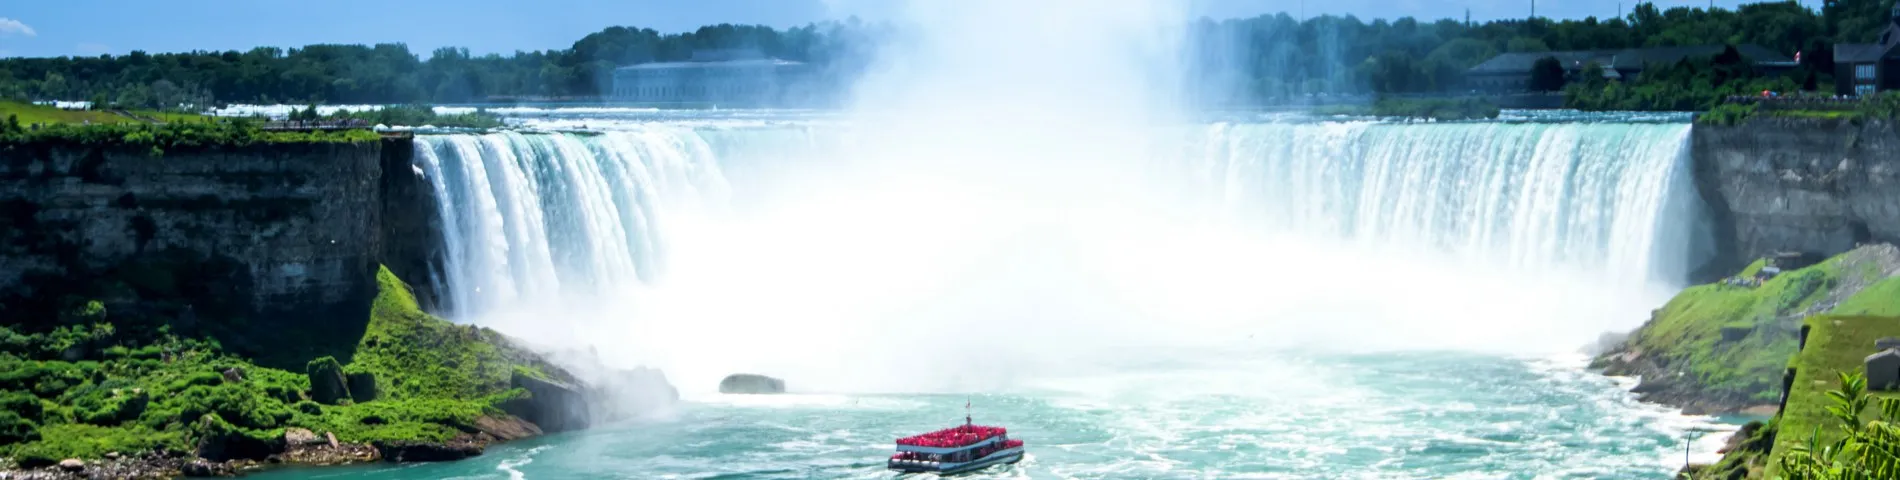 Welland (Cascate del Niagara) - 